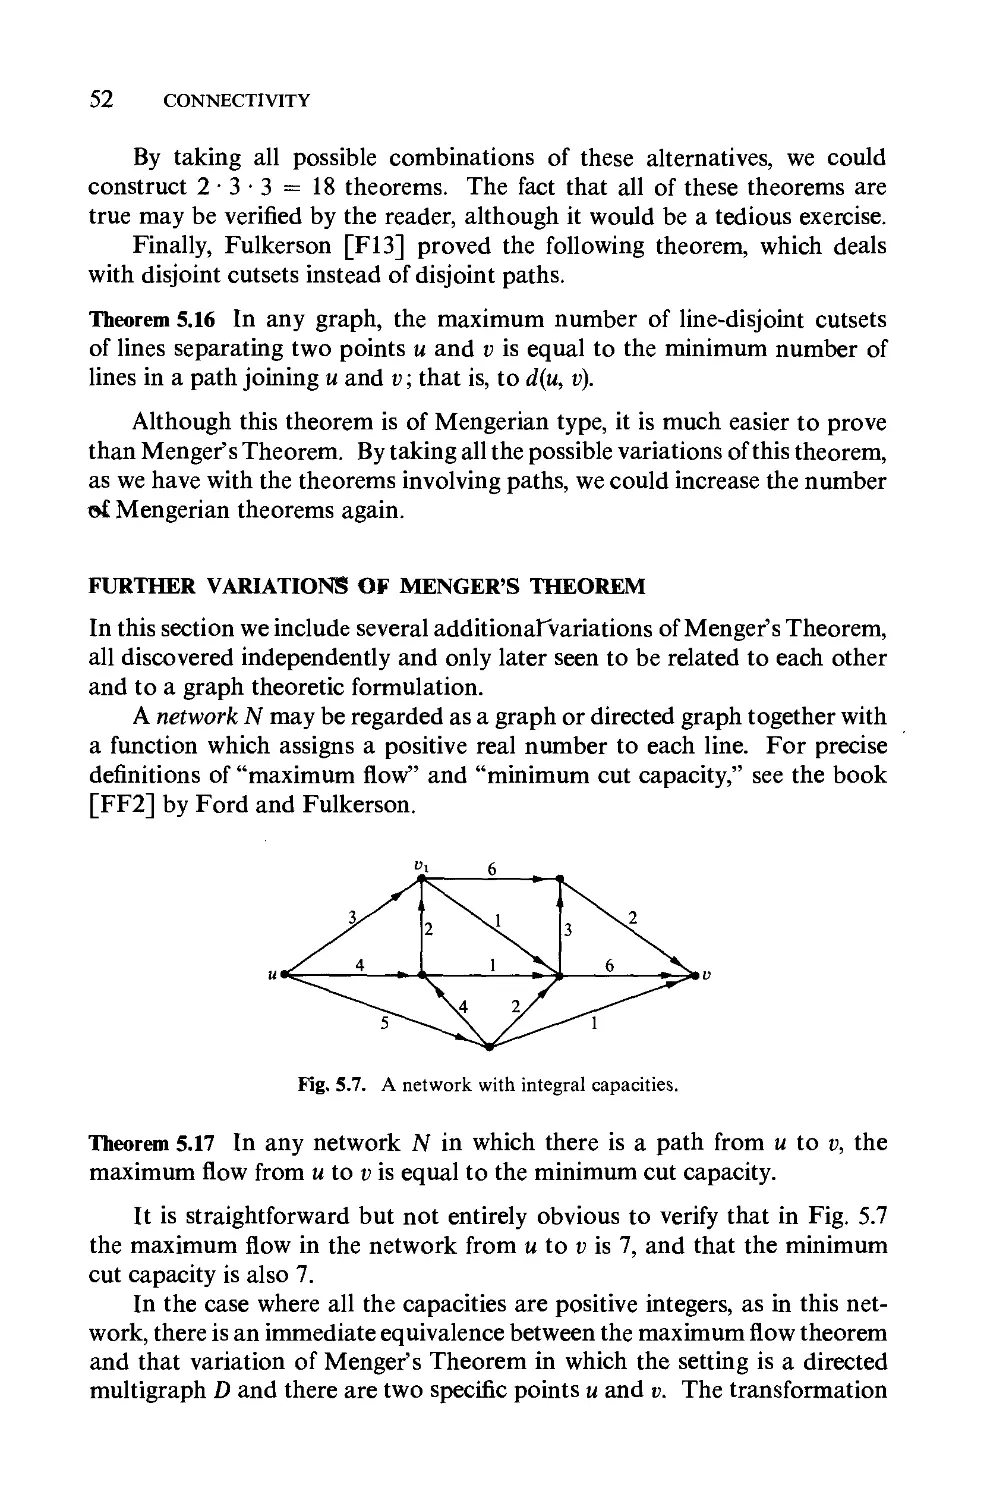 Further variations of Menger's theorem